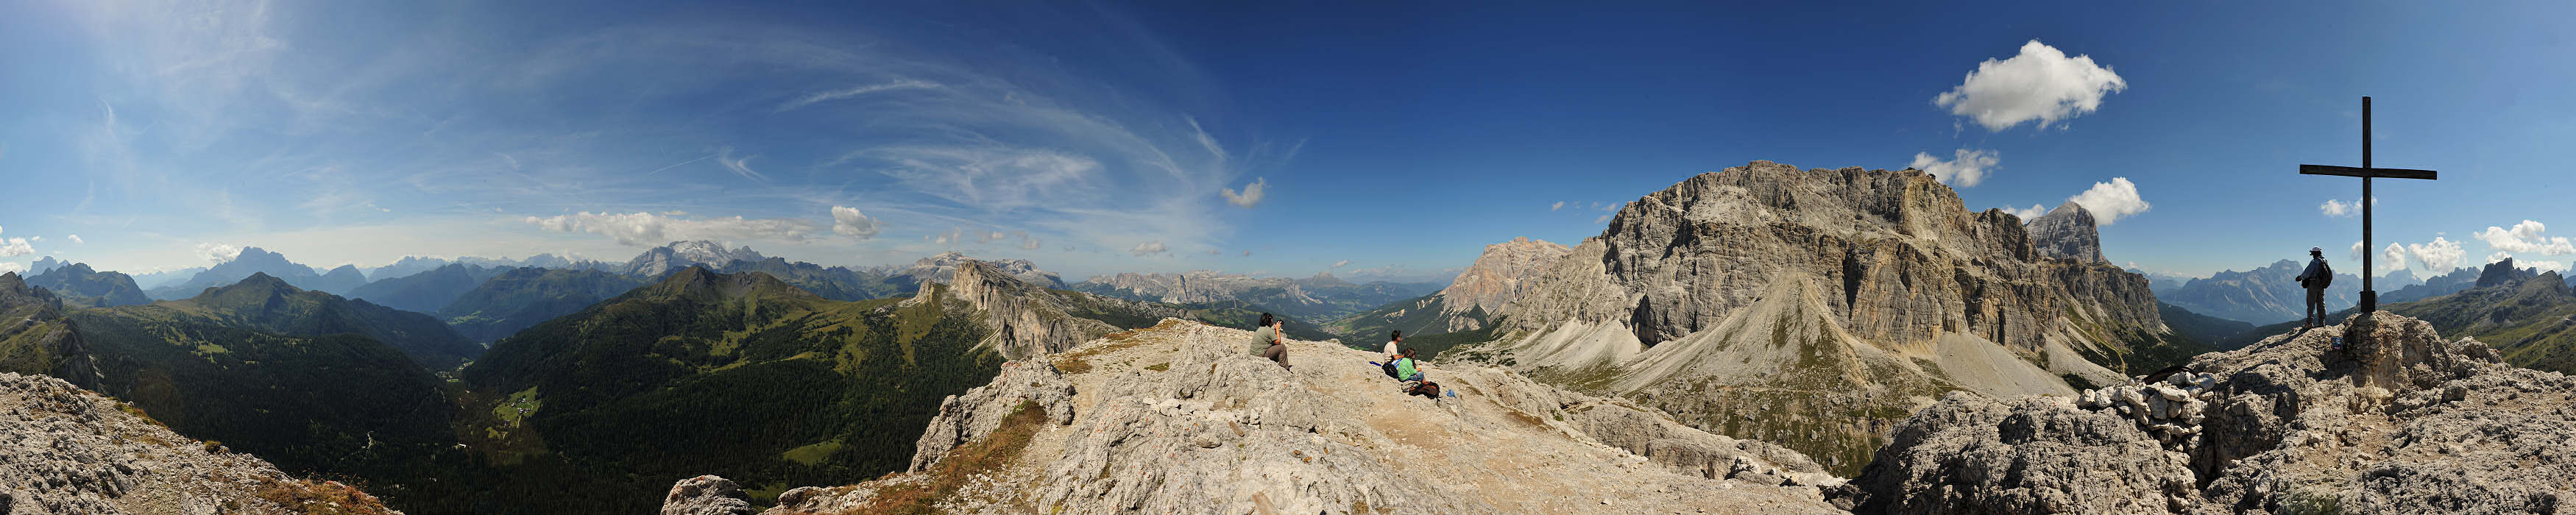 Dolomiti, Sass De Stria, Lagazuoi Falzarego Tofane, Cortina d'Ampezzo